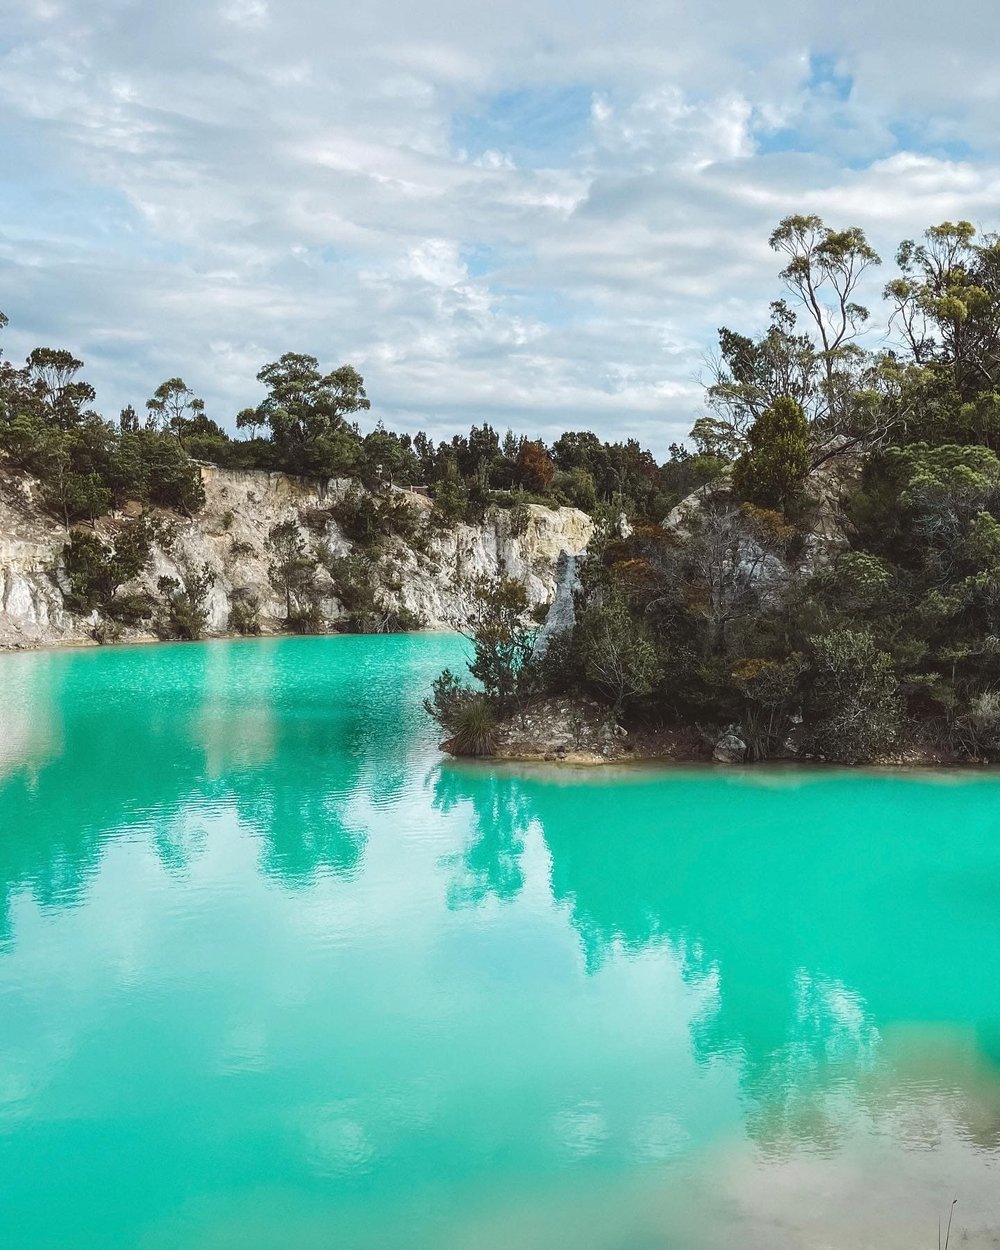 Green water of the lake - Little Blue Lake - Tasmania - Australia